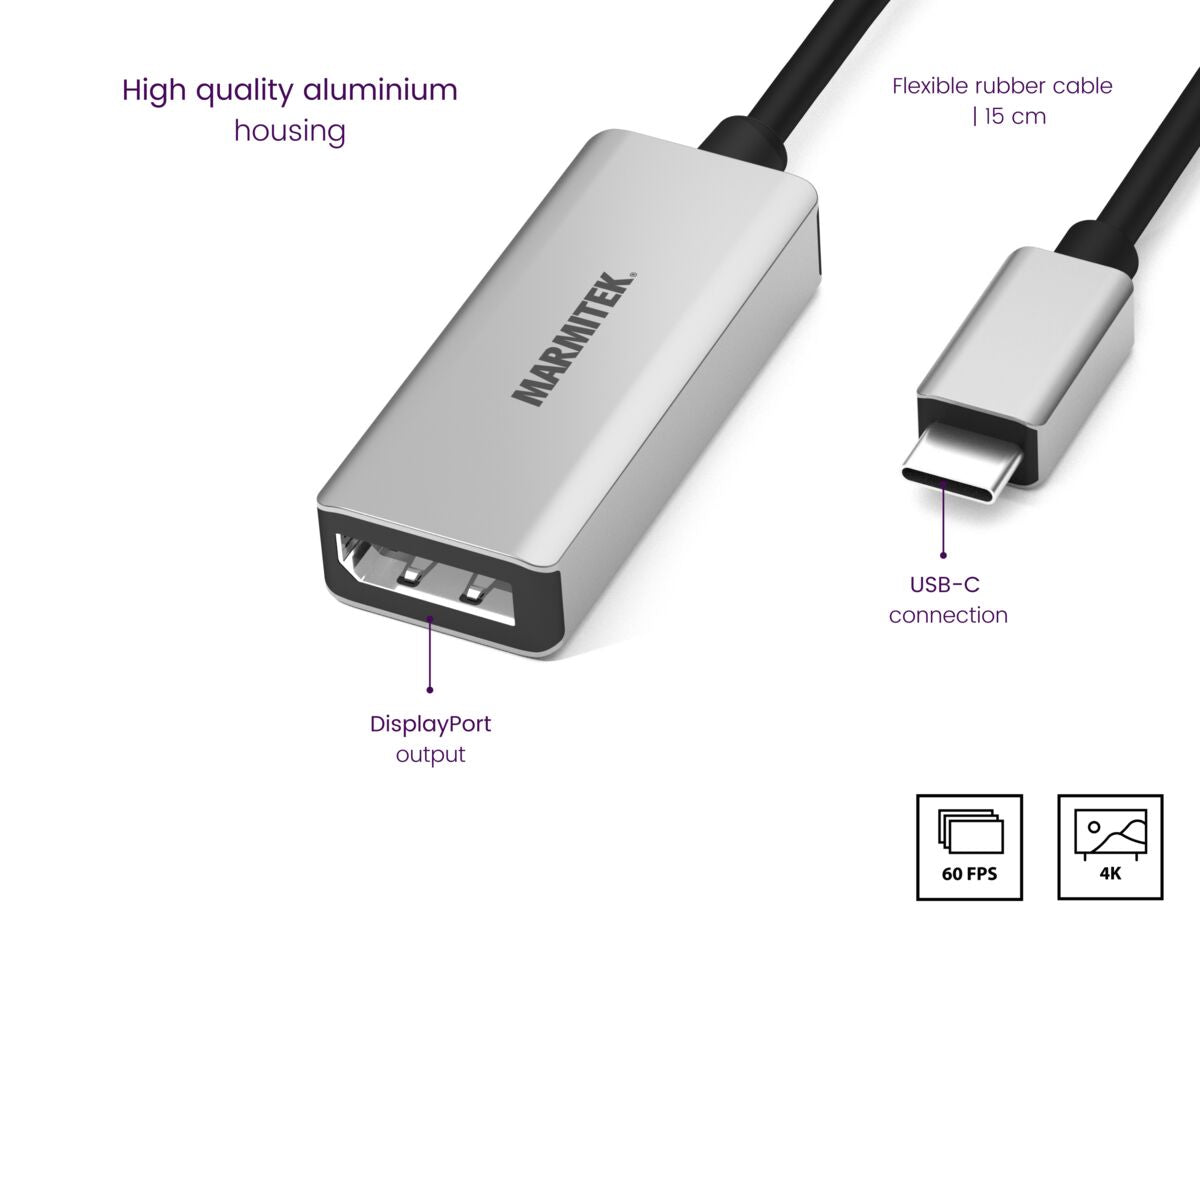 Connect USB C > DisplayPort - USB-C to DisplayPort adapter